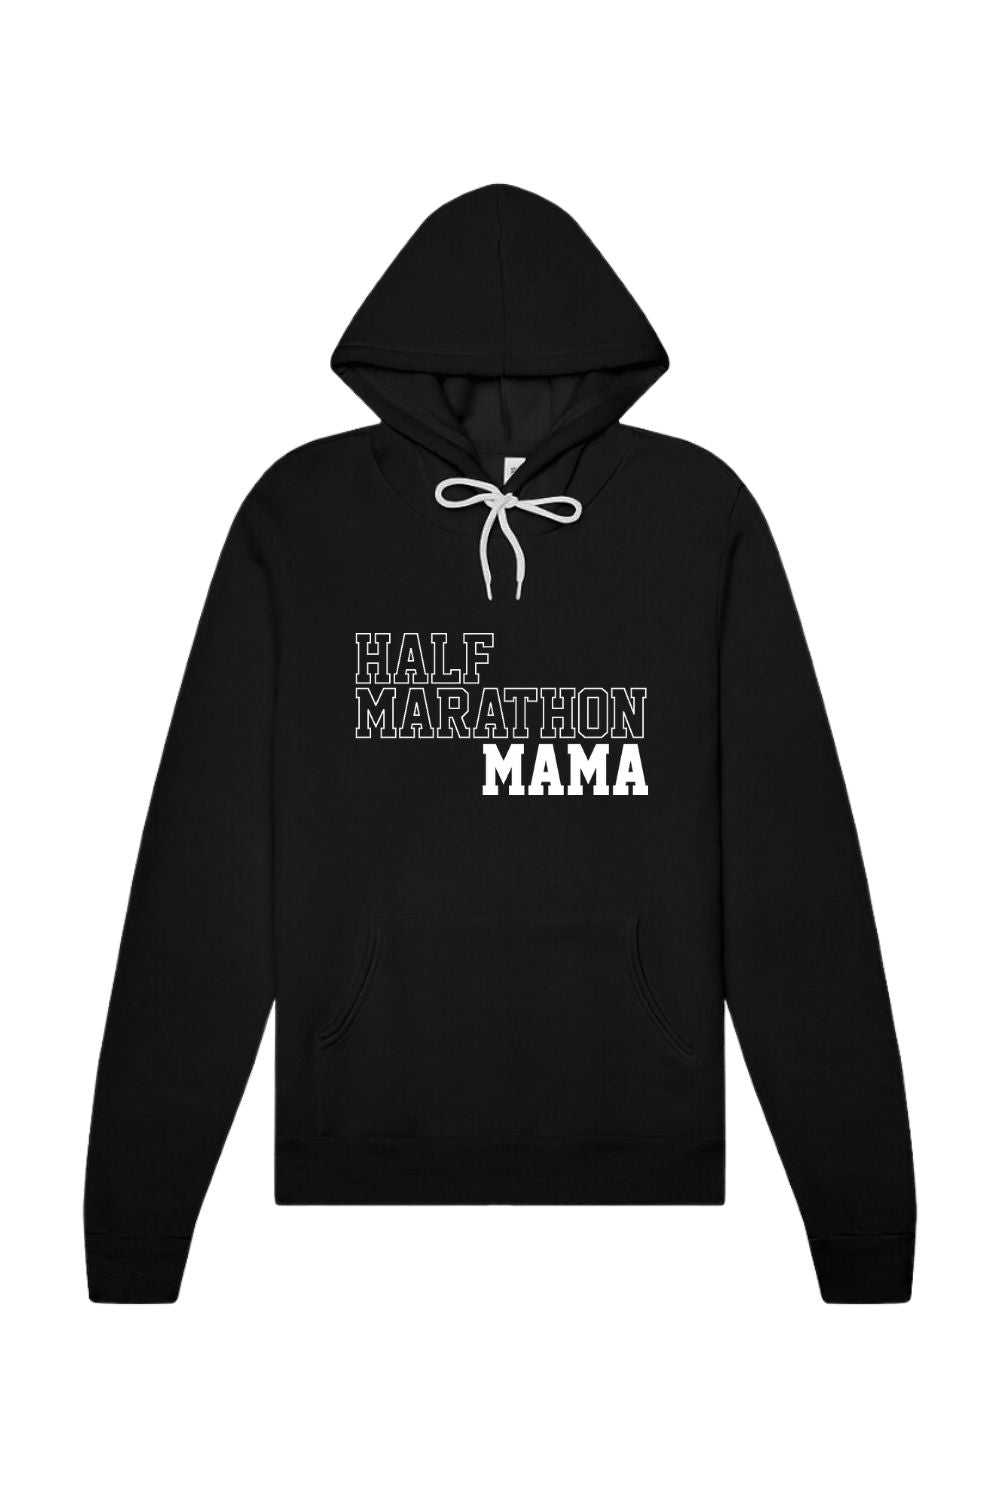 Half Marathon Mama Hoodie Sweatshirt